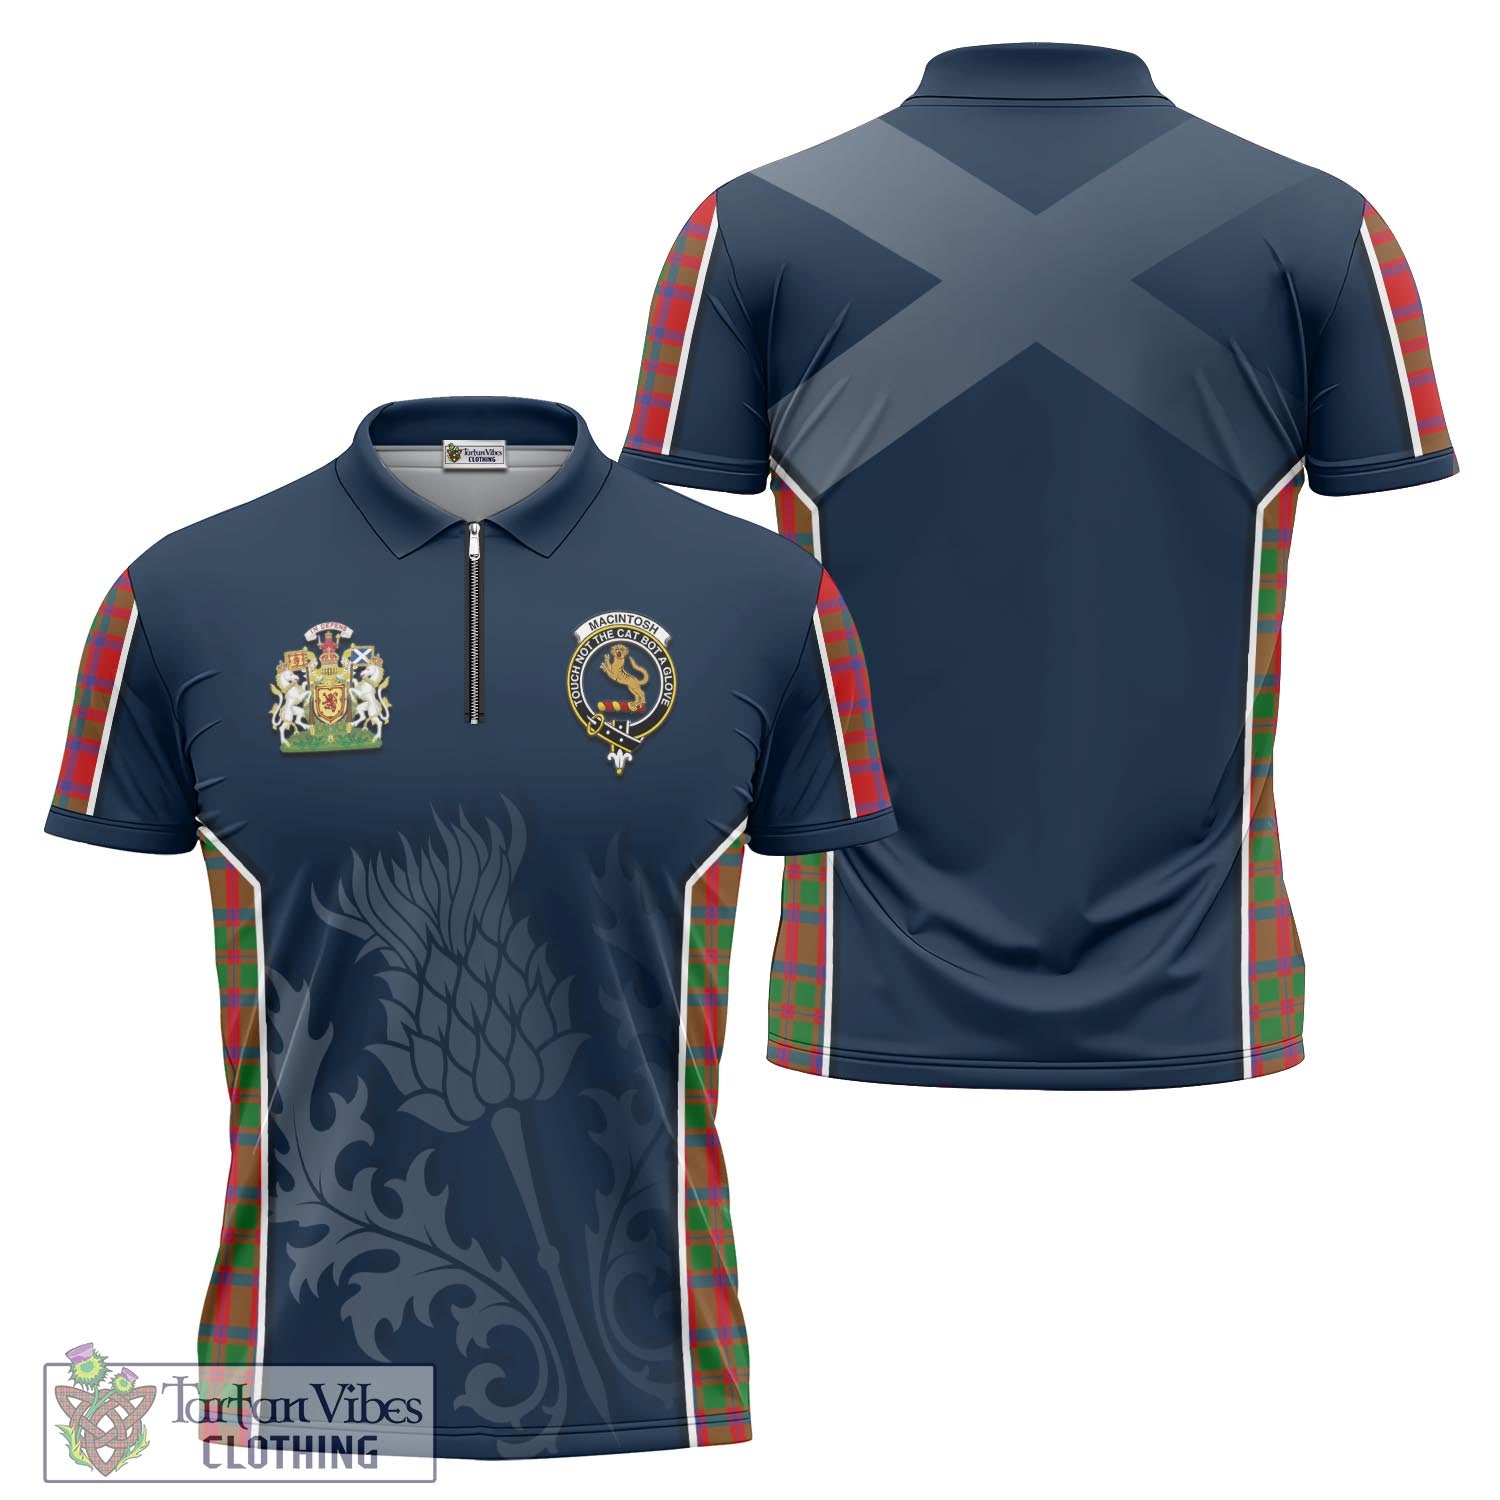 Tartan Vibes Clothing MacIntosh Modern Tartan Zipper Polo Shirt with Family Crest and Scottish Thistle Vibes Sport Style